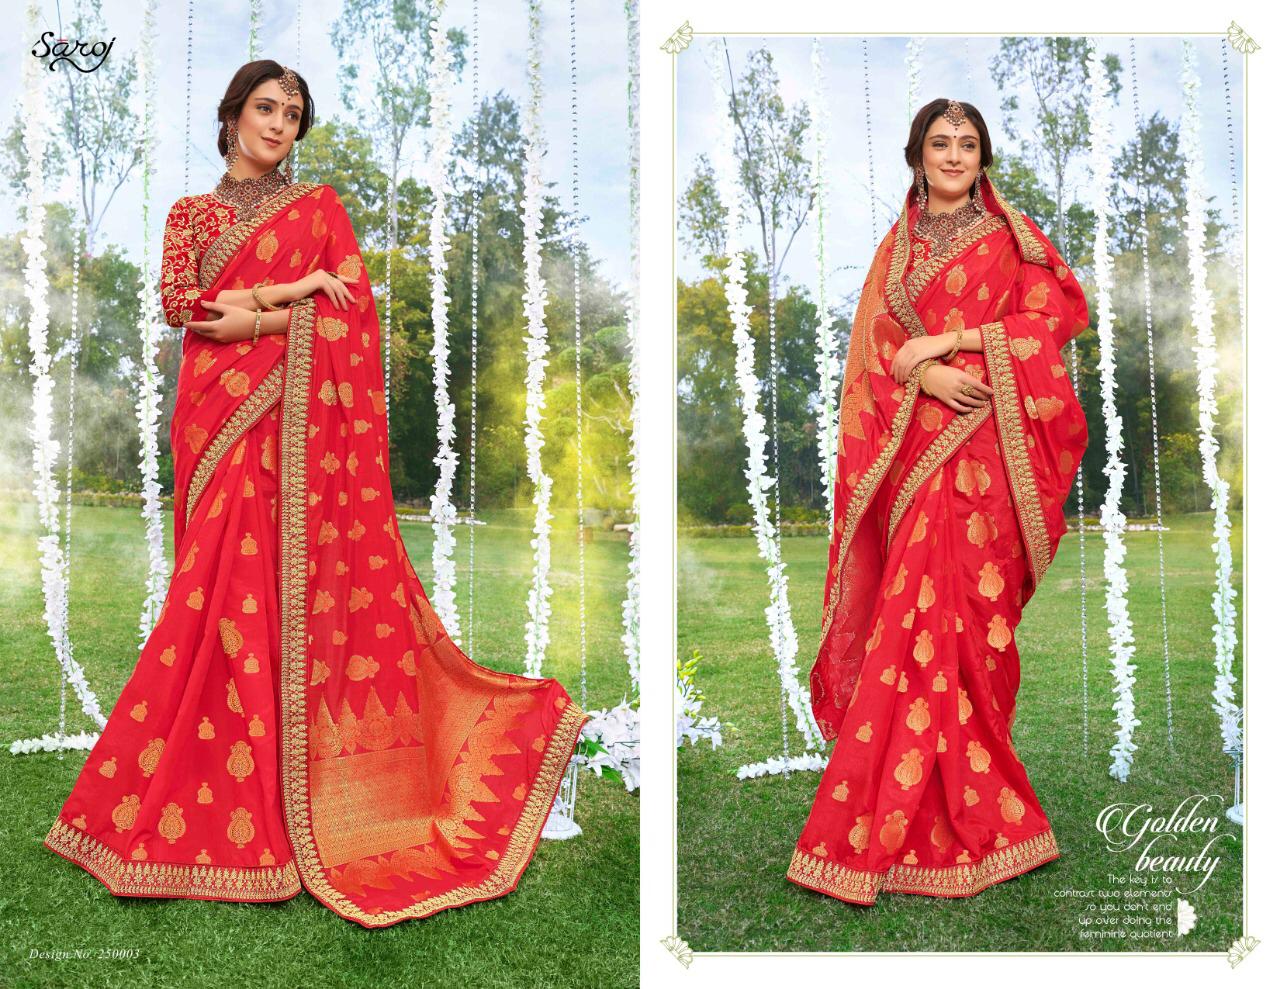 Saroj maheera astonishing style attractive look Sarees